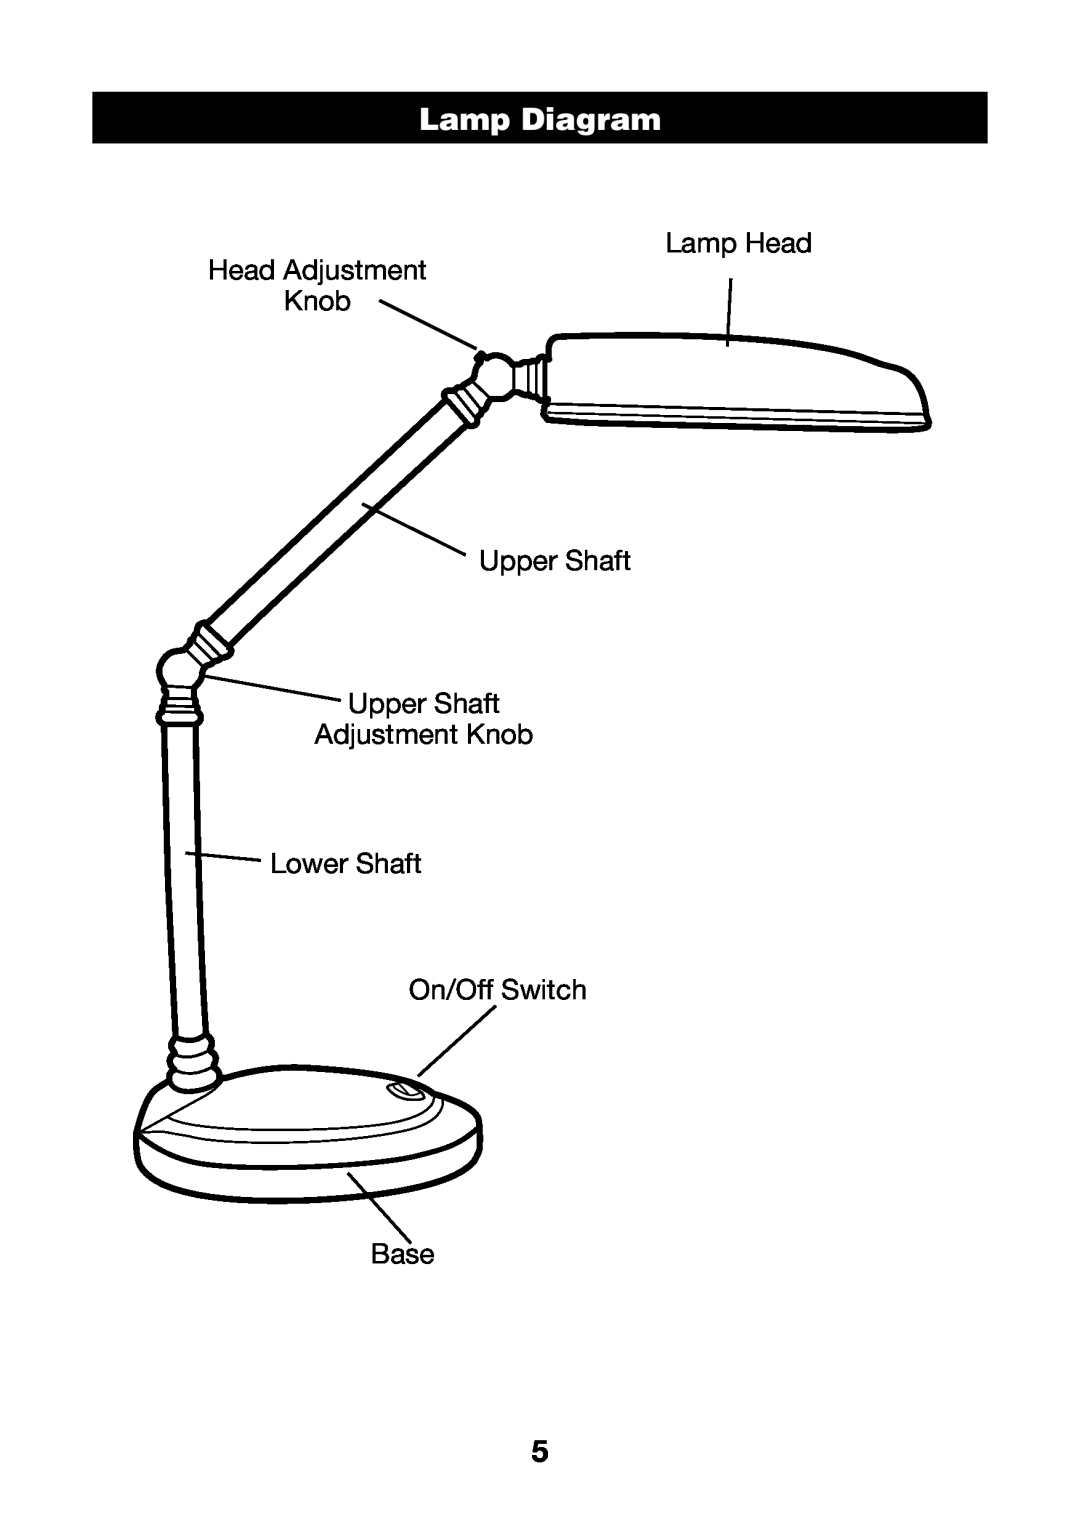 Verilux PL01PLANETLIGHT manual Lamp Diagram, Head Adjustment Knob, Lamp Head, Upper Shaft Upper Shaft Adjustment Knob 